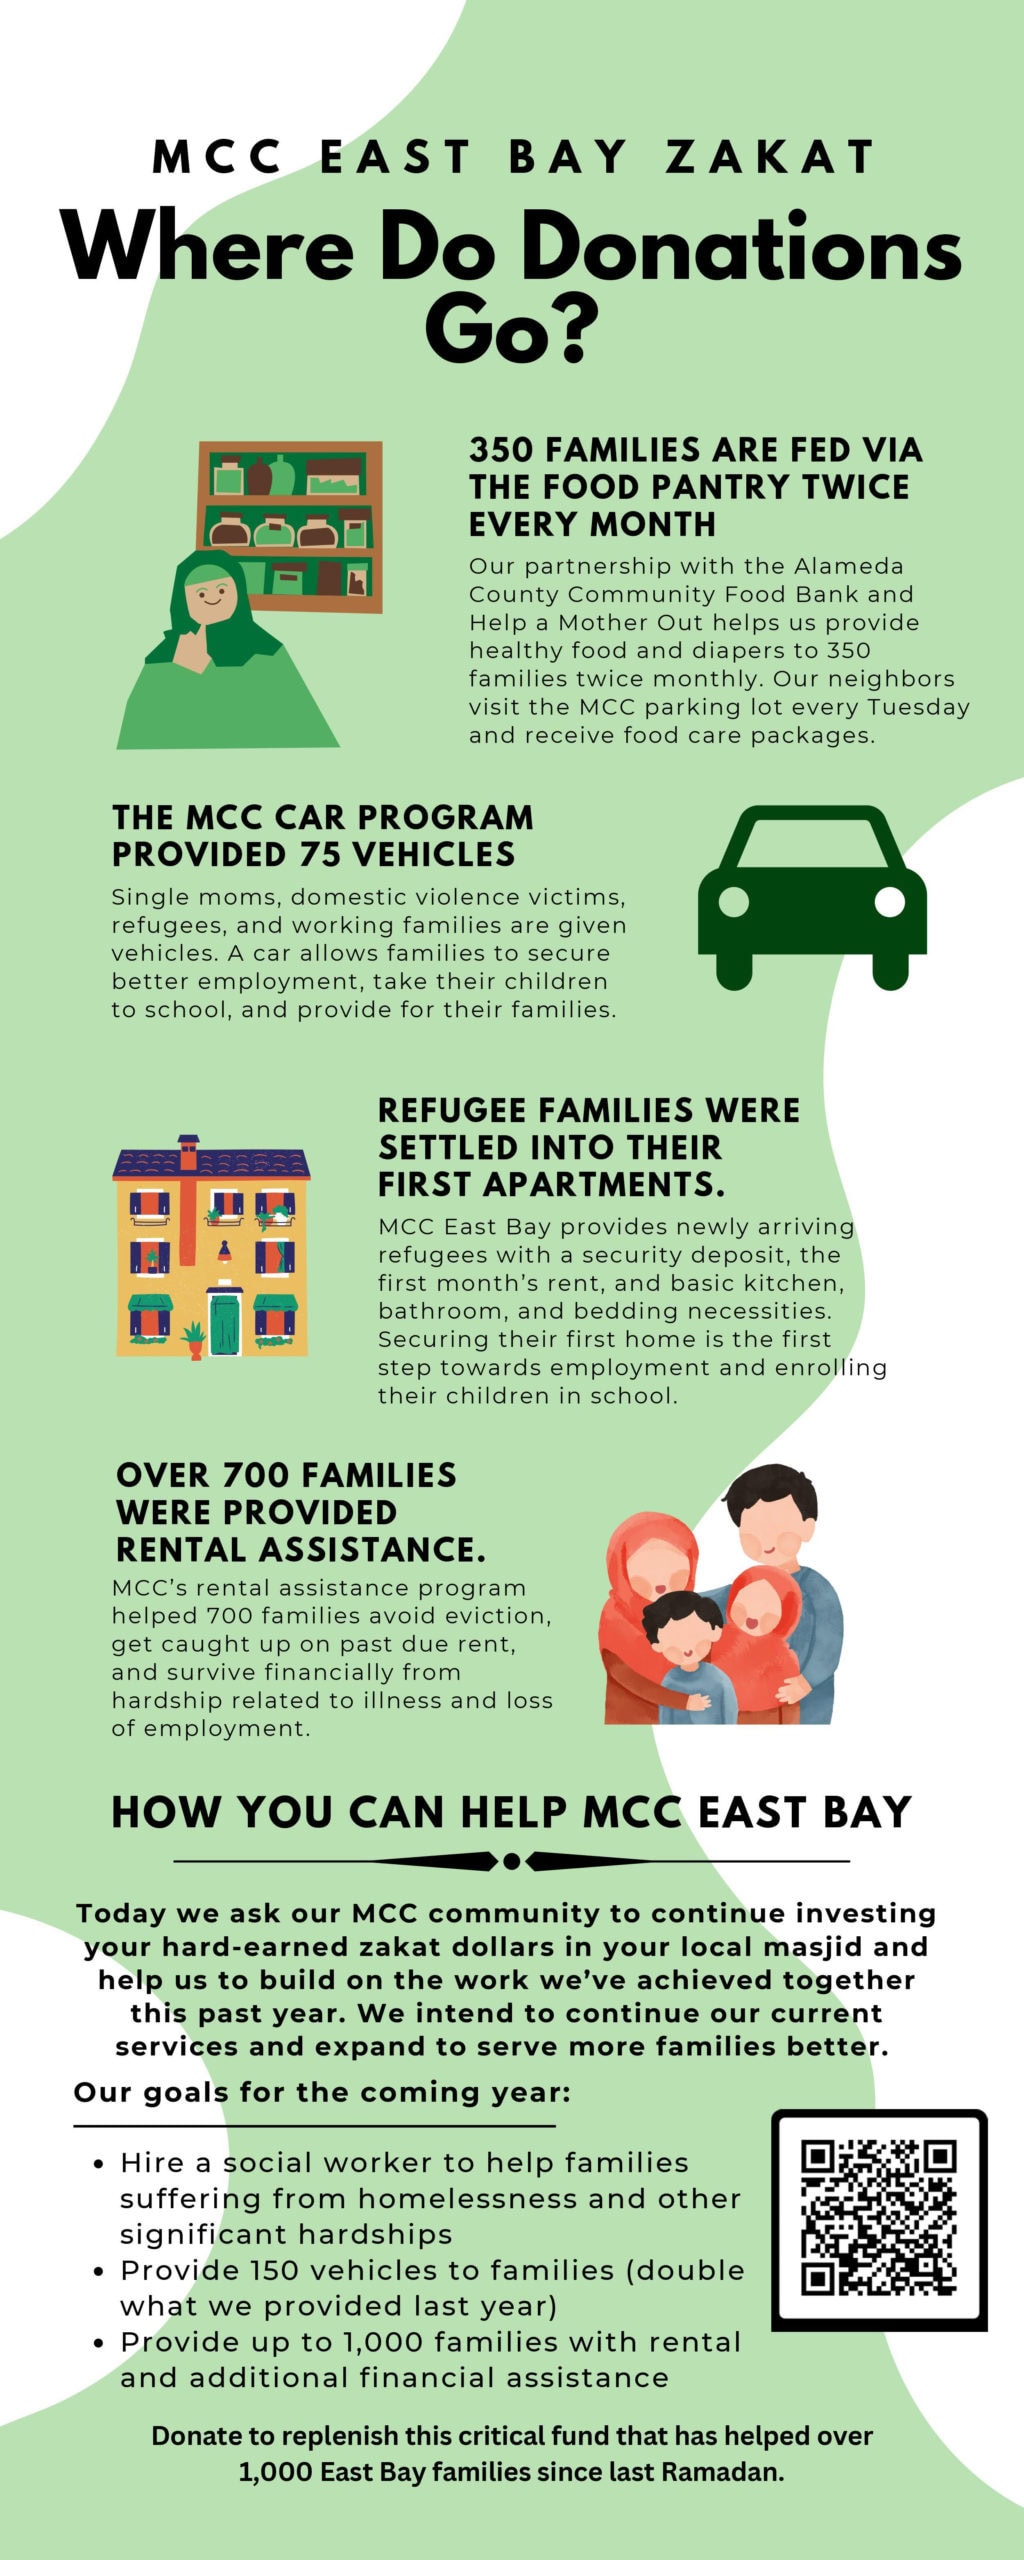 MCC Zakat Program - Serving Our Most Vulnerable Community Members